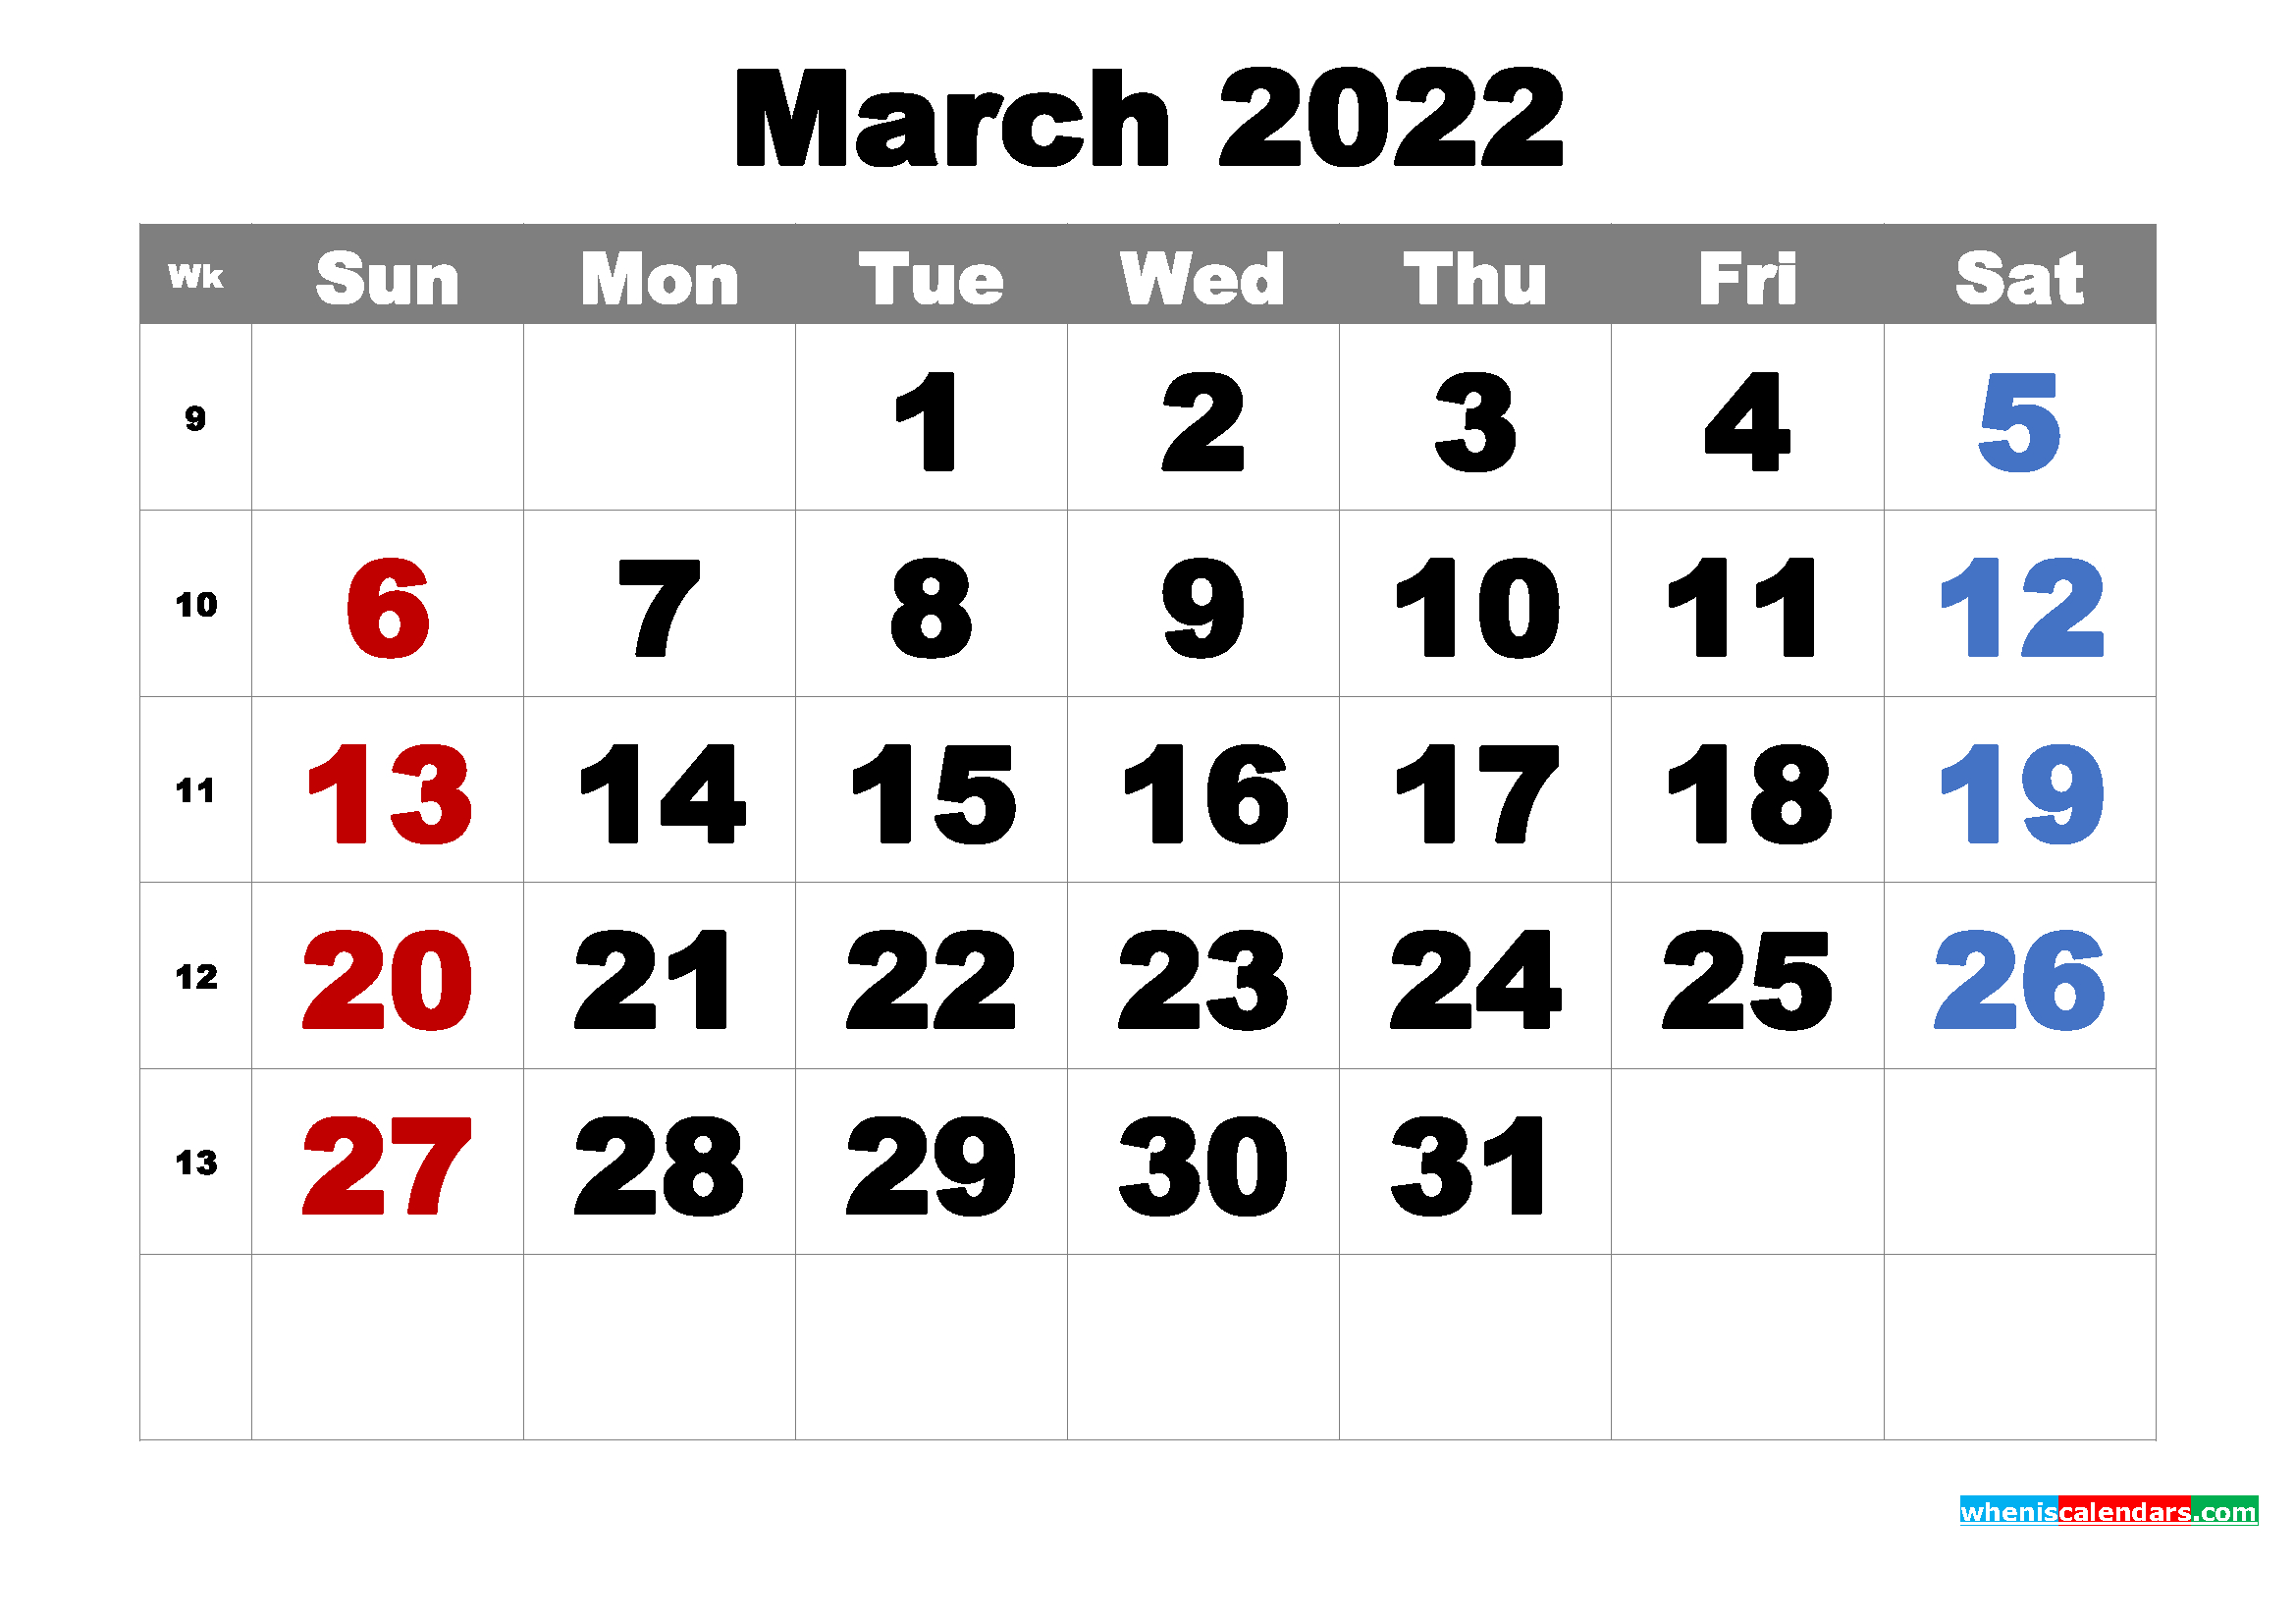 Free Printable March 2022 Calendar Word, Pdf, Image